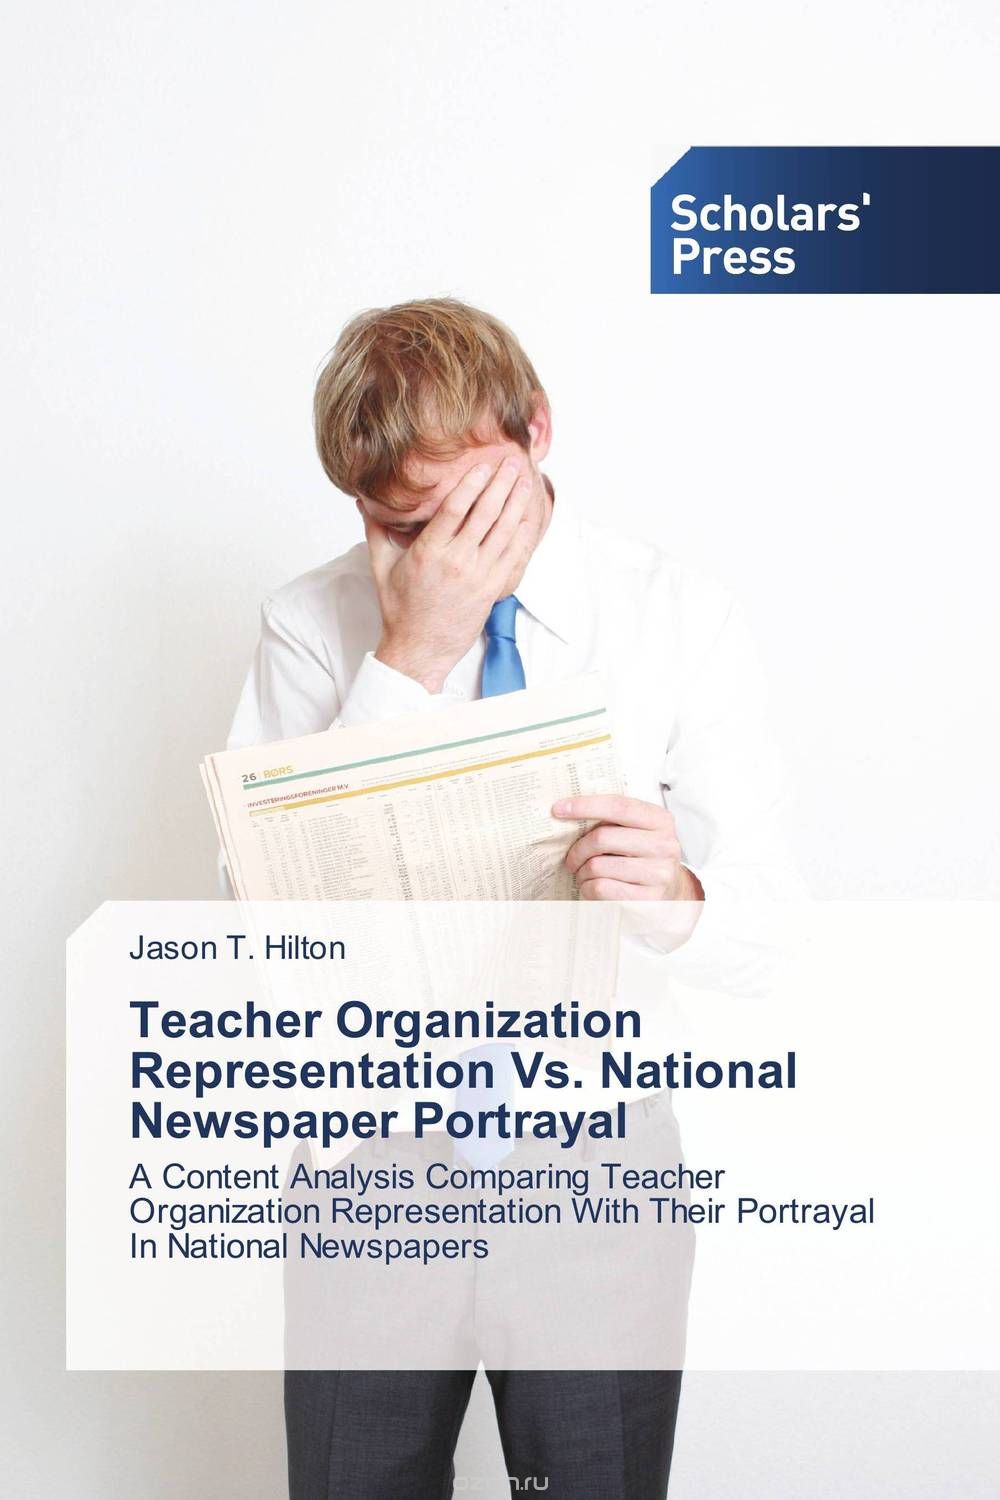 Teacher Organization Representation Vs. National Newspaper Portrayal